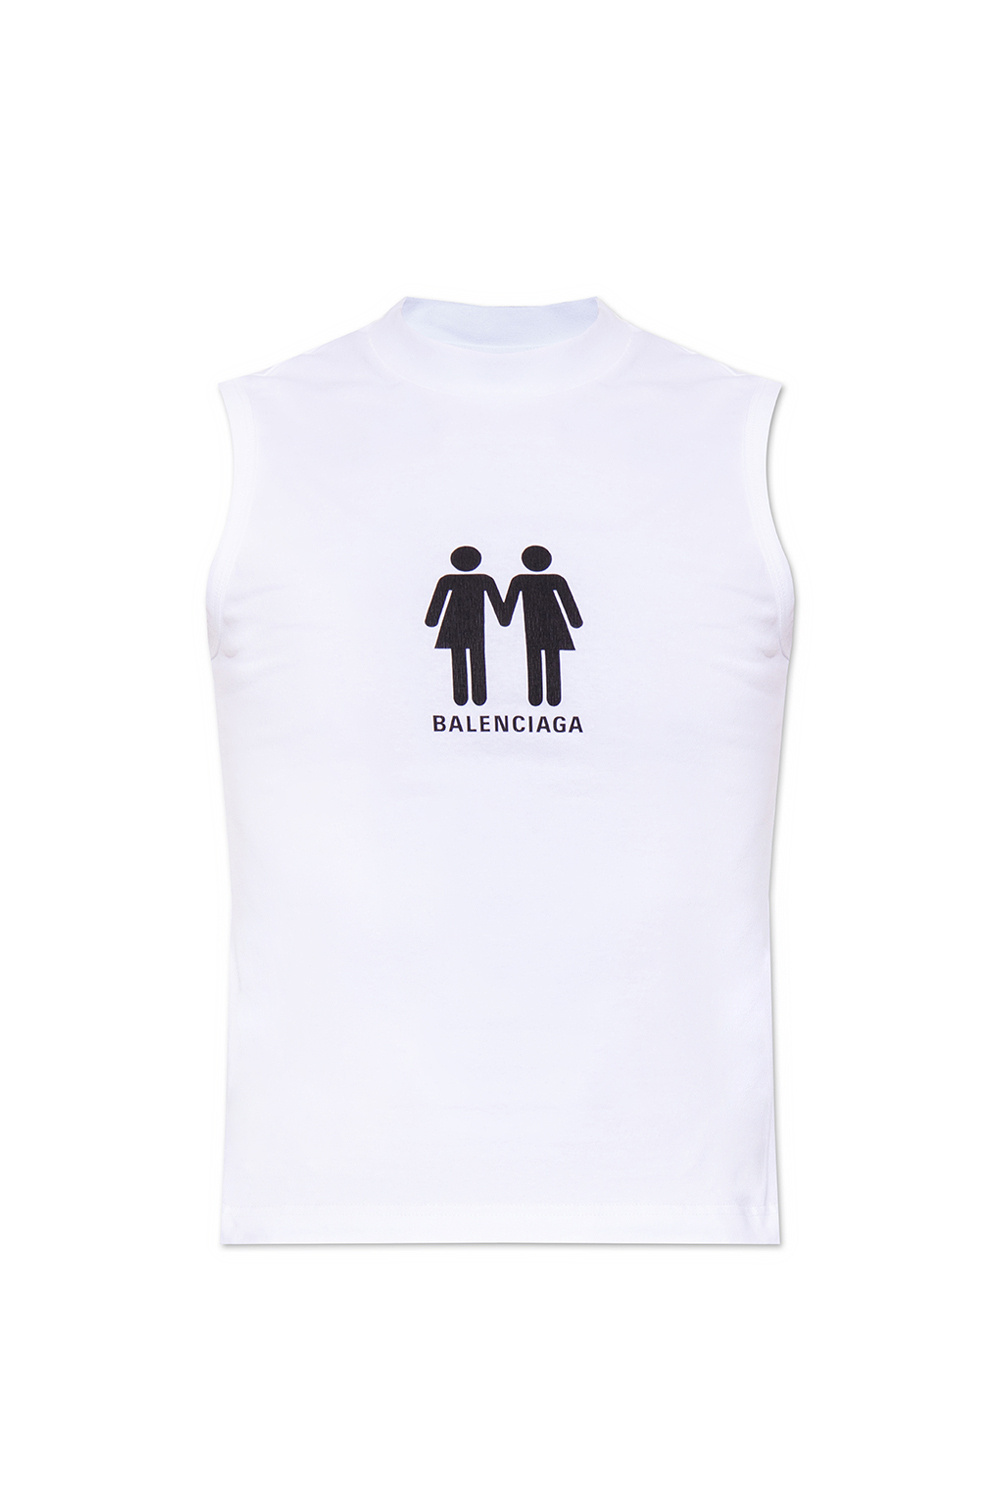 For Kids Balenciaga Mickey sleeveless - 2022\' - Sweater With \'Pride - Mous Australia IetpShops Black shirt T White